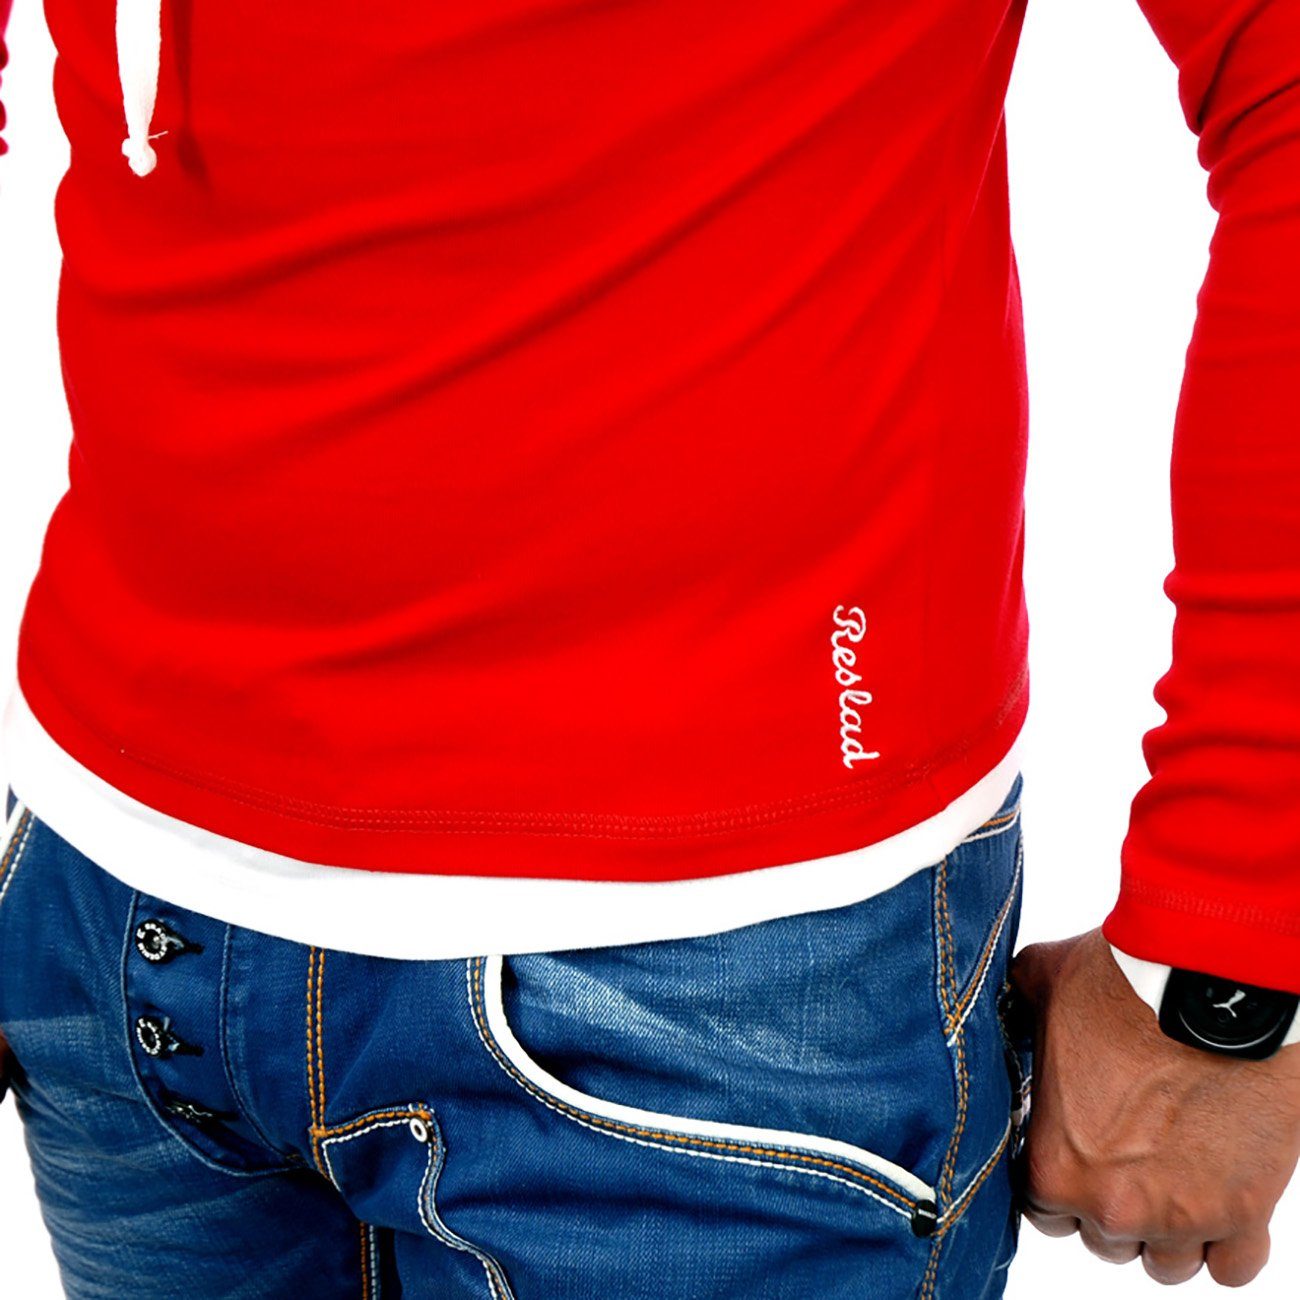 Sweatshirt Reslad (1-tlg) RS-1003 Layer-Look Reslad Sweatshirt Kapuzen Kapuzensweatshirt rot-weiß Herren